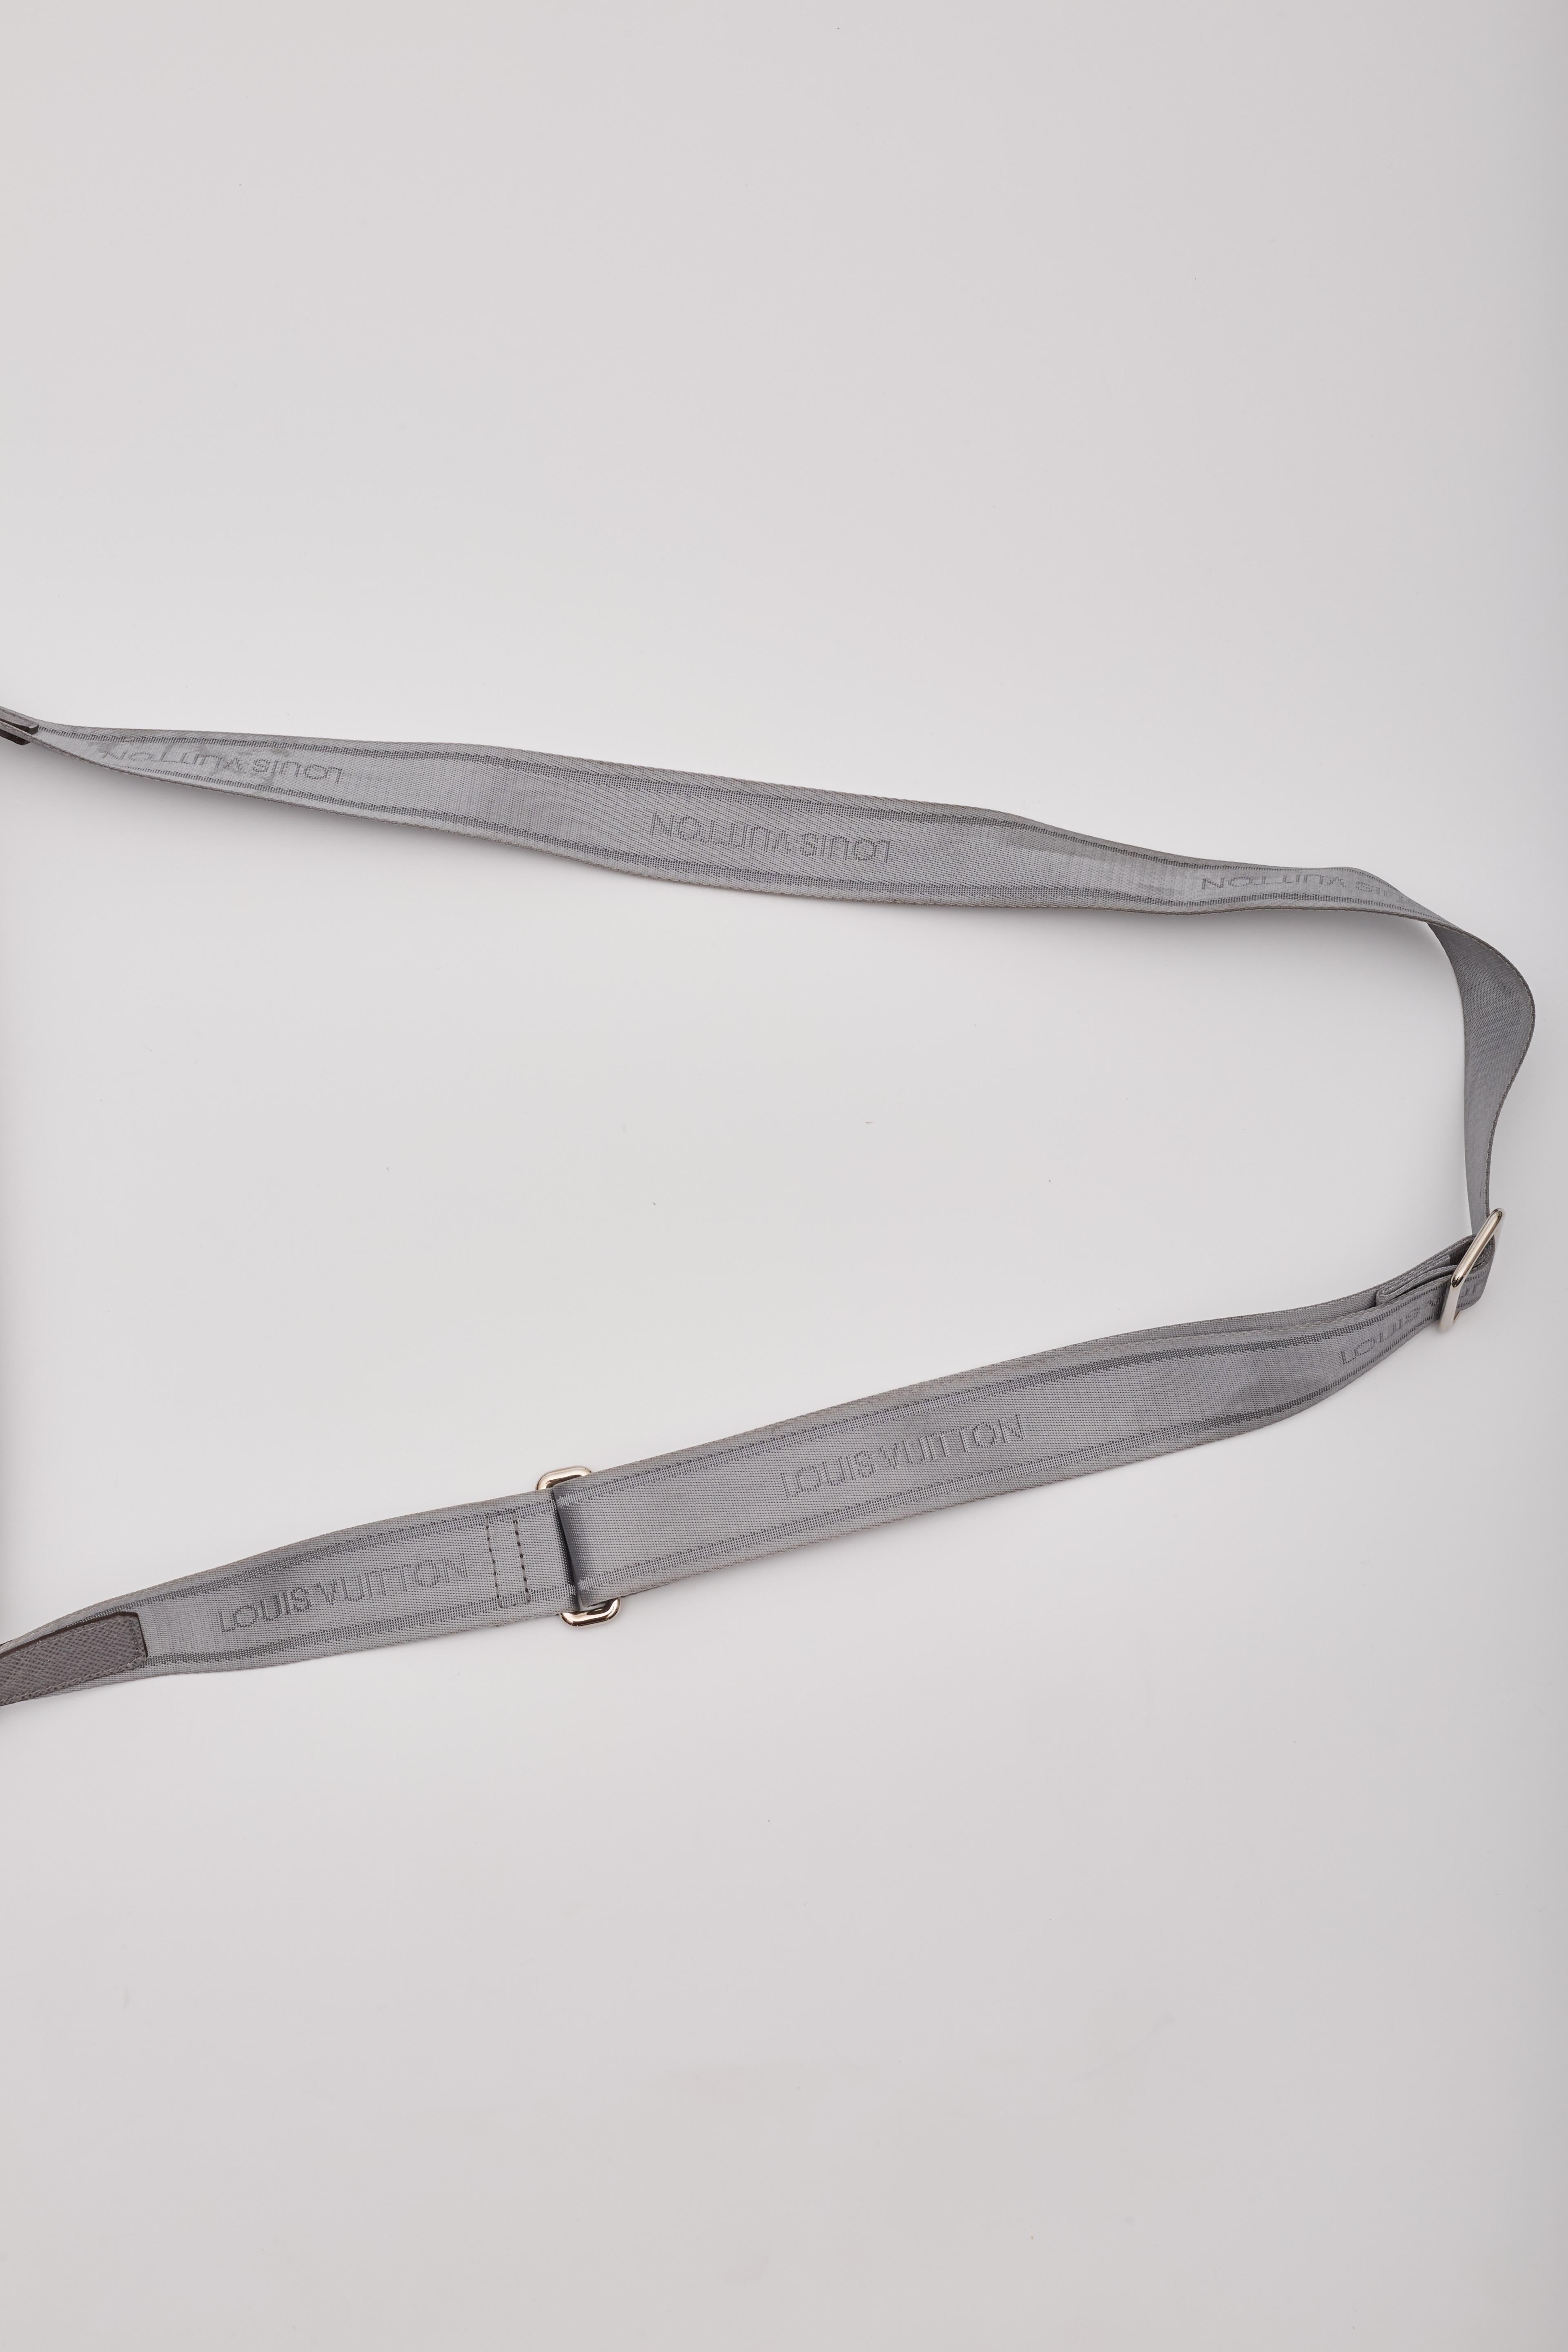 Louis Vuitton Grey Taiga Roman Pm Messenger Bag Glacier For Sale 5